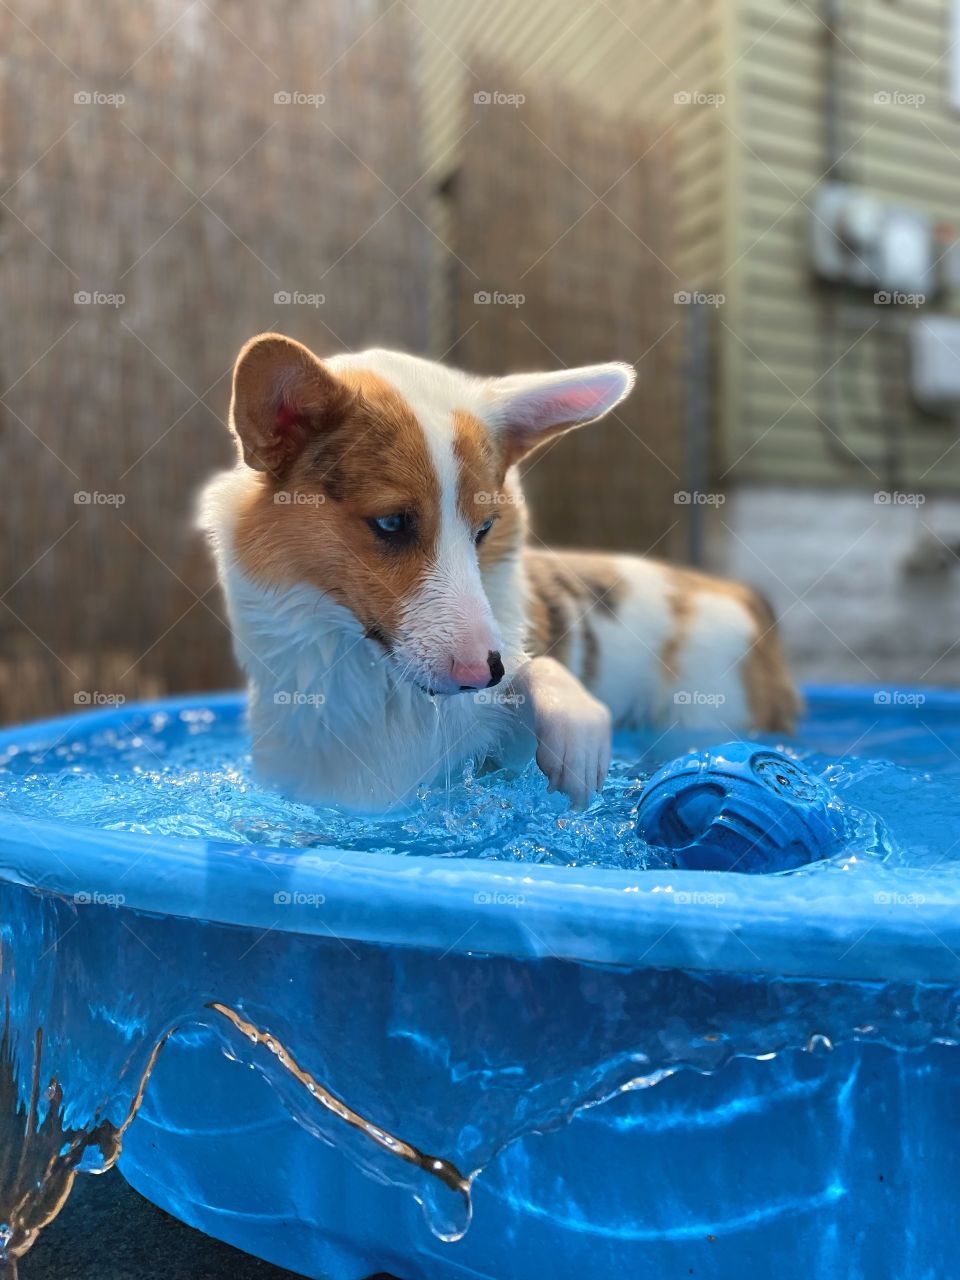 Corgi playing pool summer water ball splashes water drops cute blue eyed dog pet pets animals